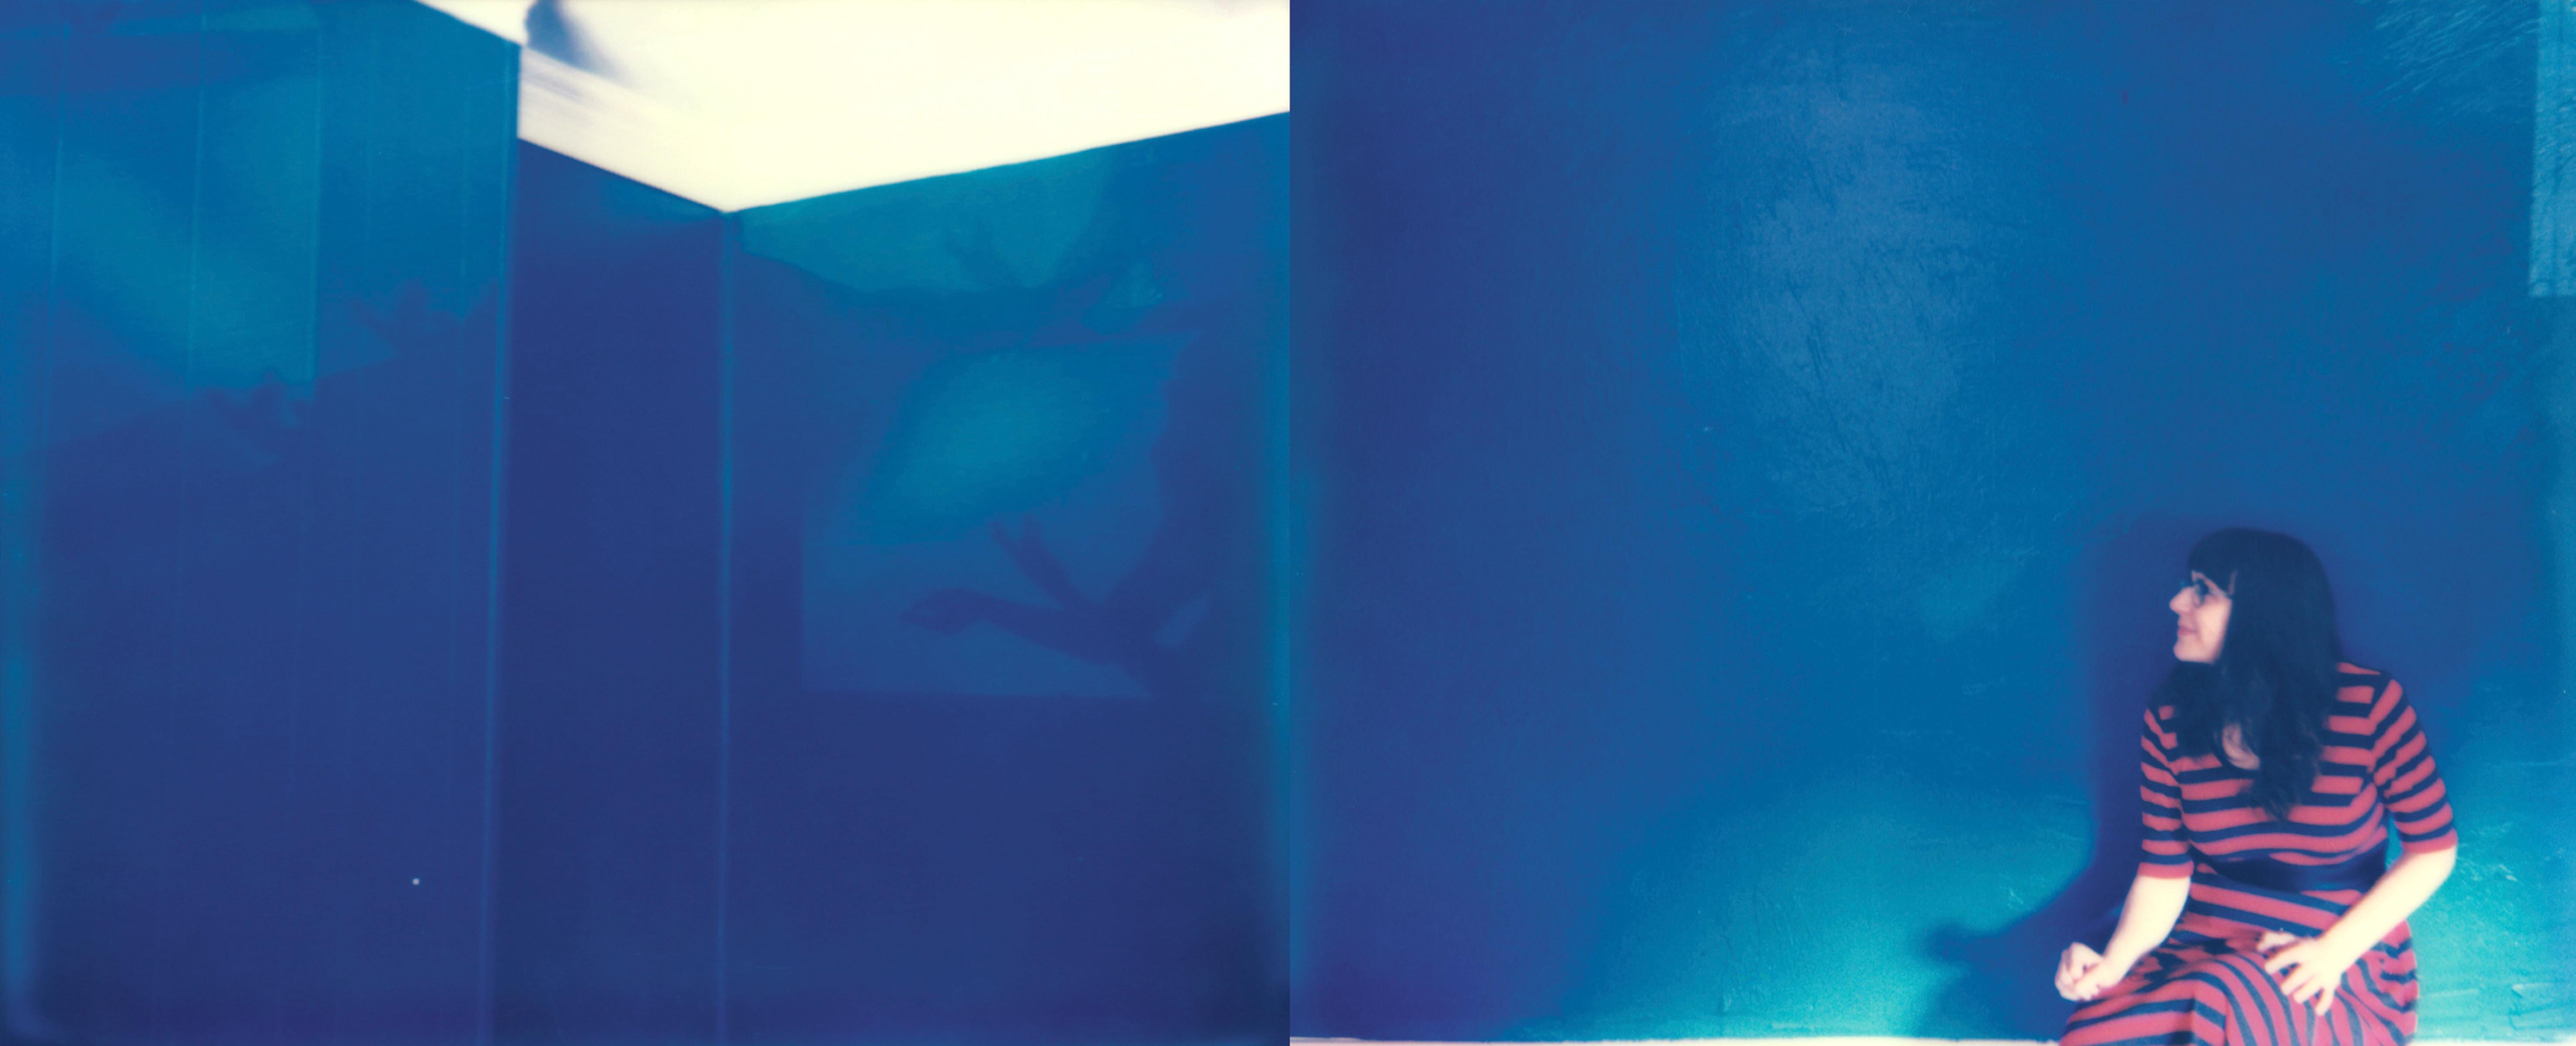 Lisa Toboz Figurative Photograph - Shadow Play - Blue, Contemporary, Figurative, Woman, Polaroid, Photograph